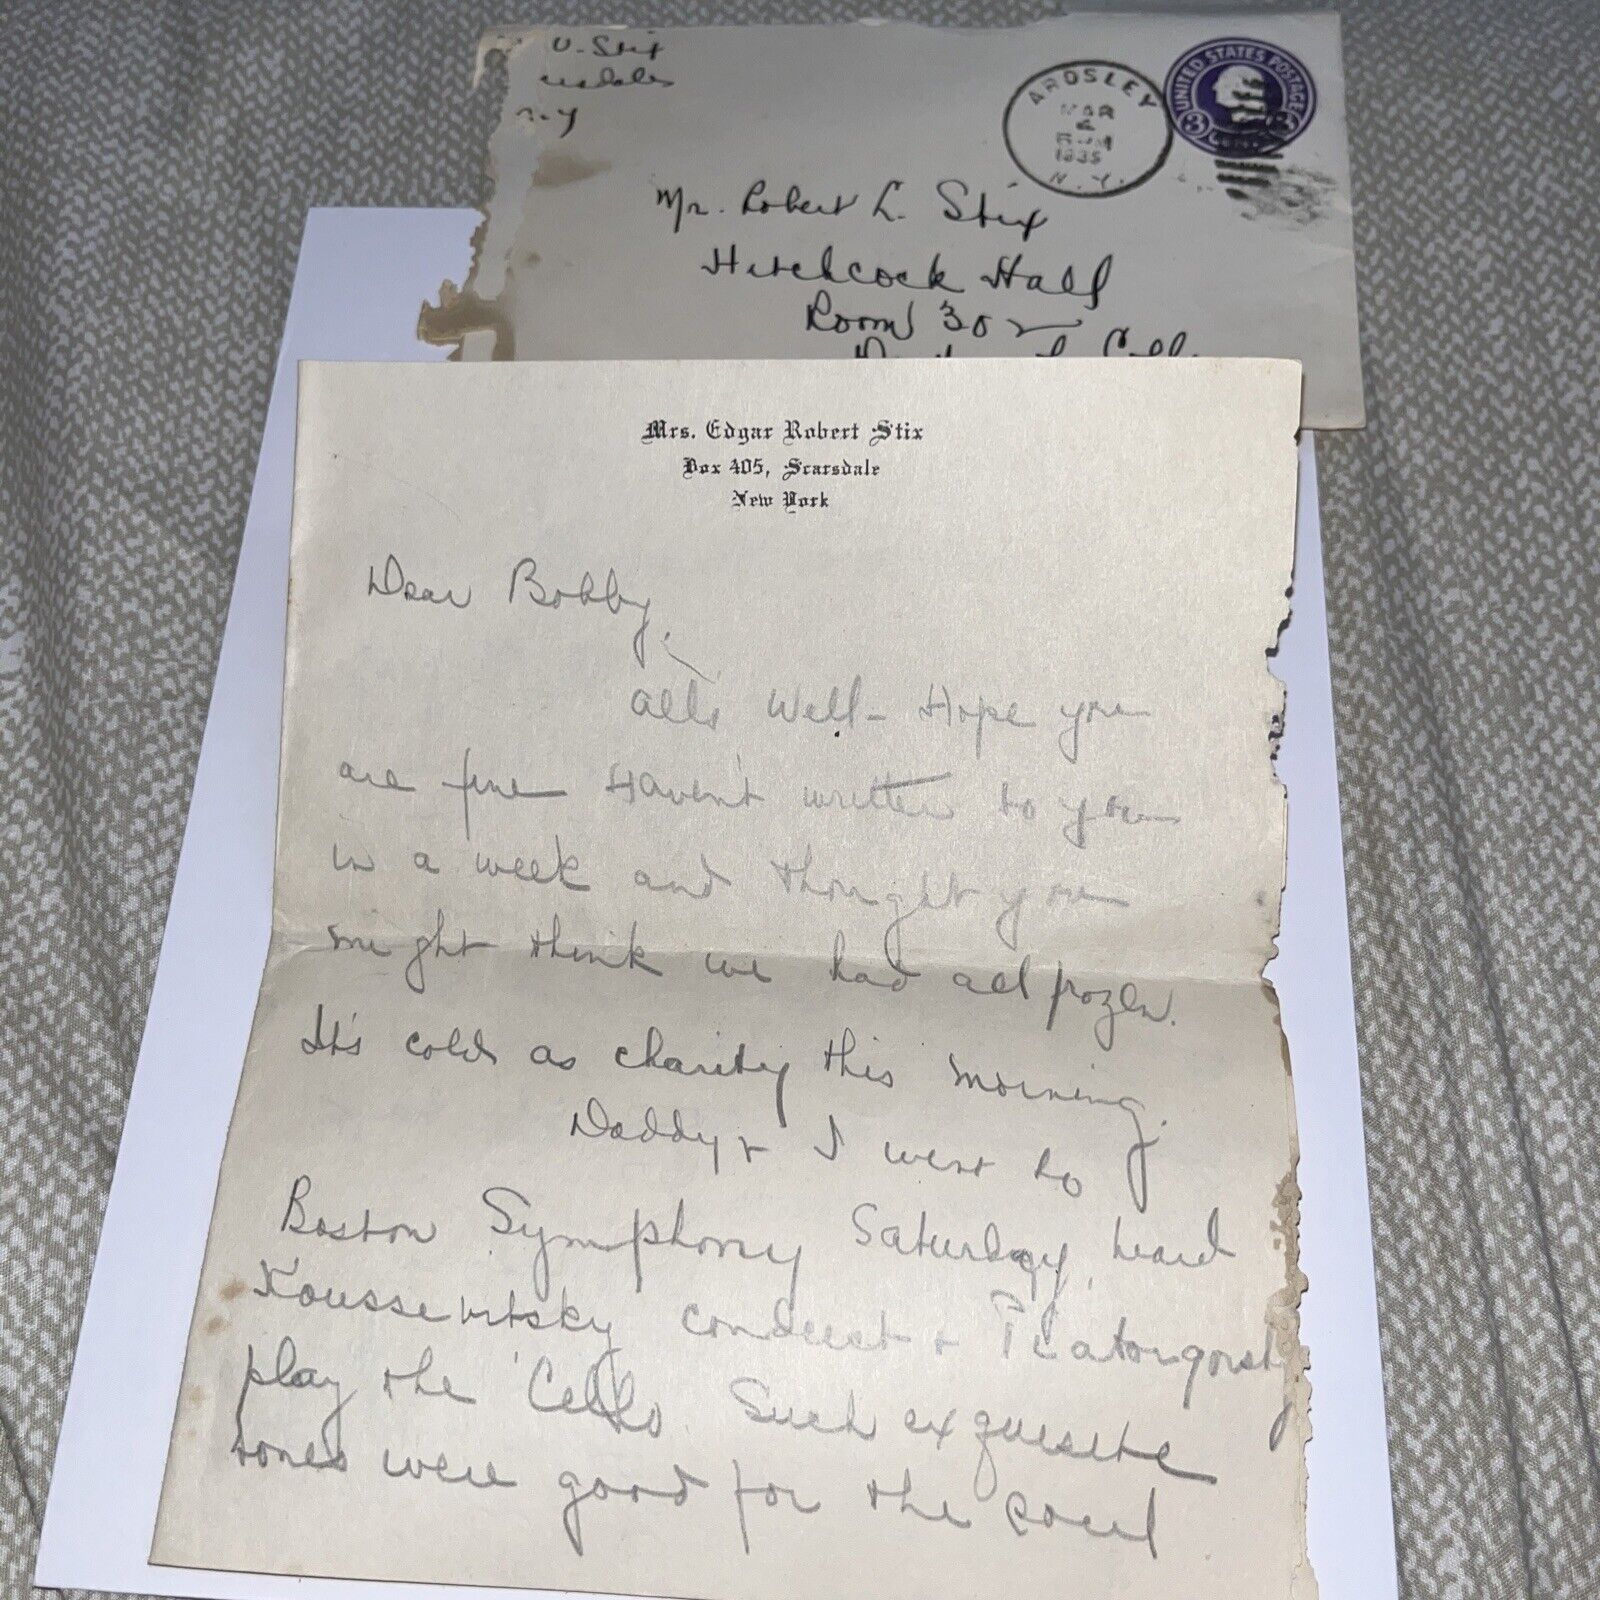 1935 Depression Era Letter to Dartmouth College Student on Boston Symphony